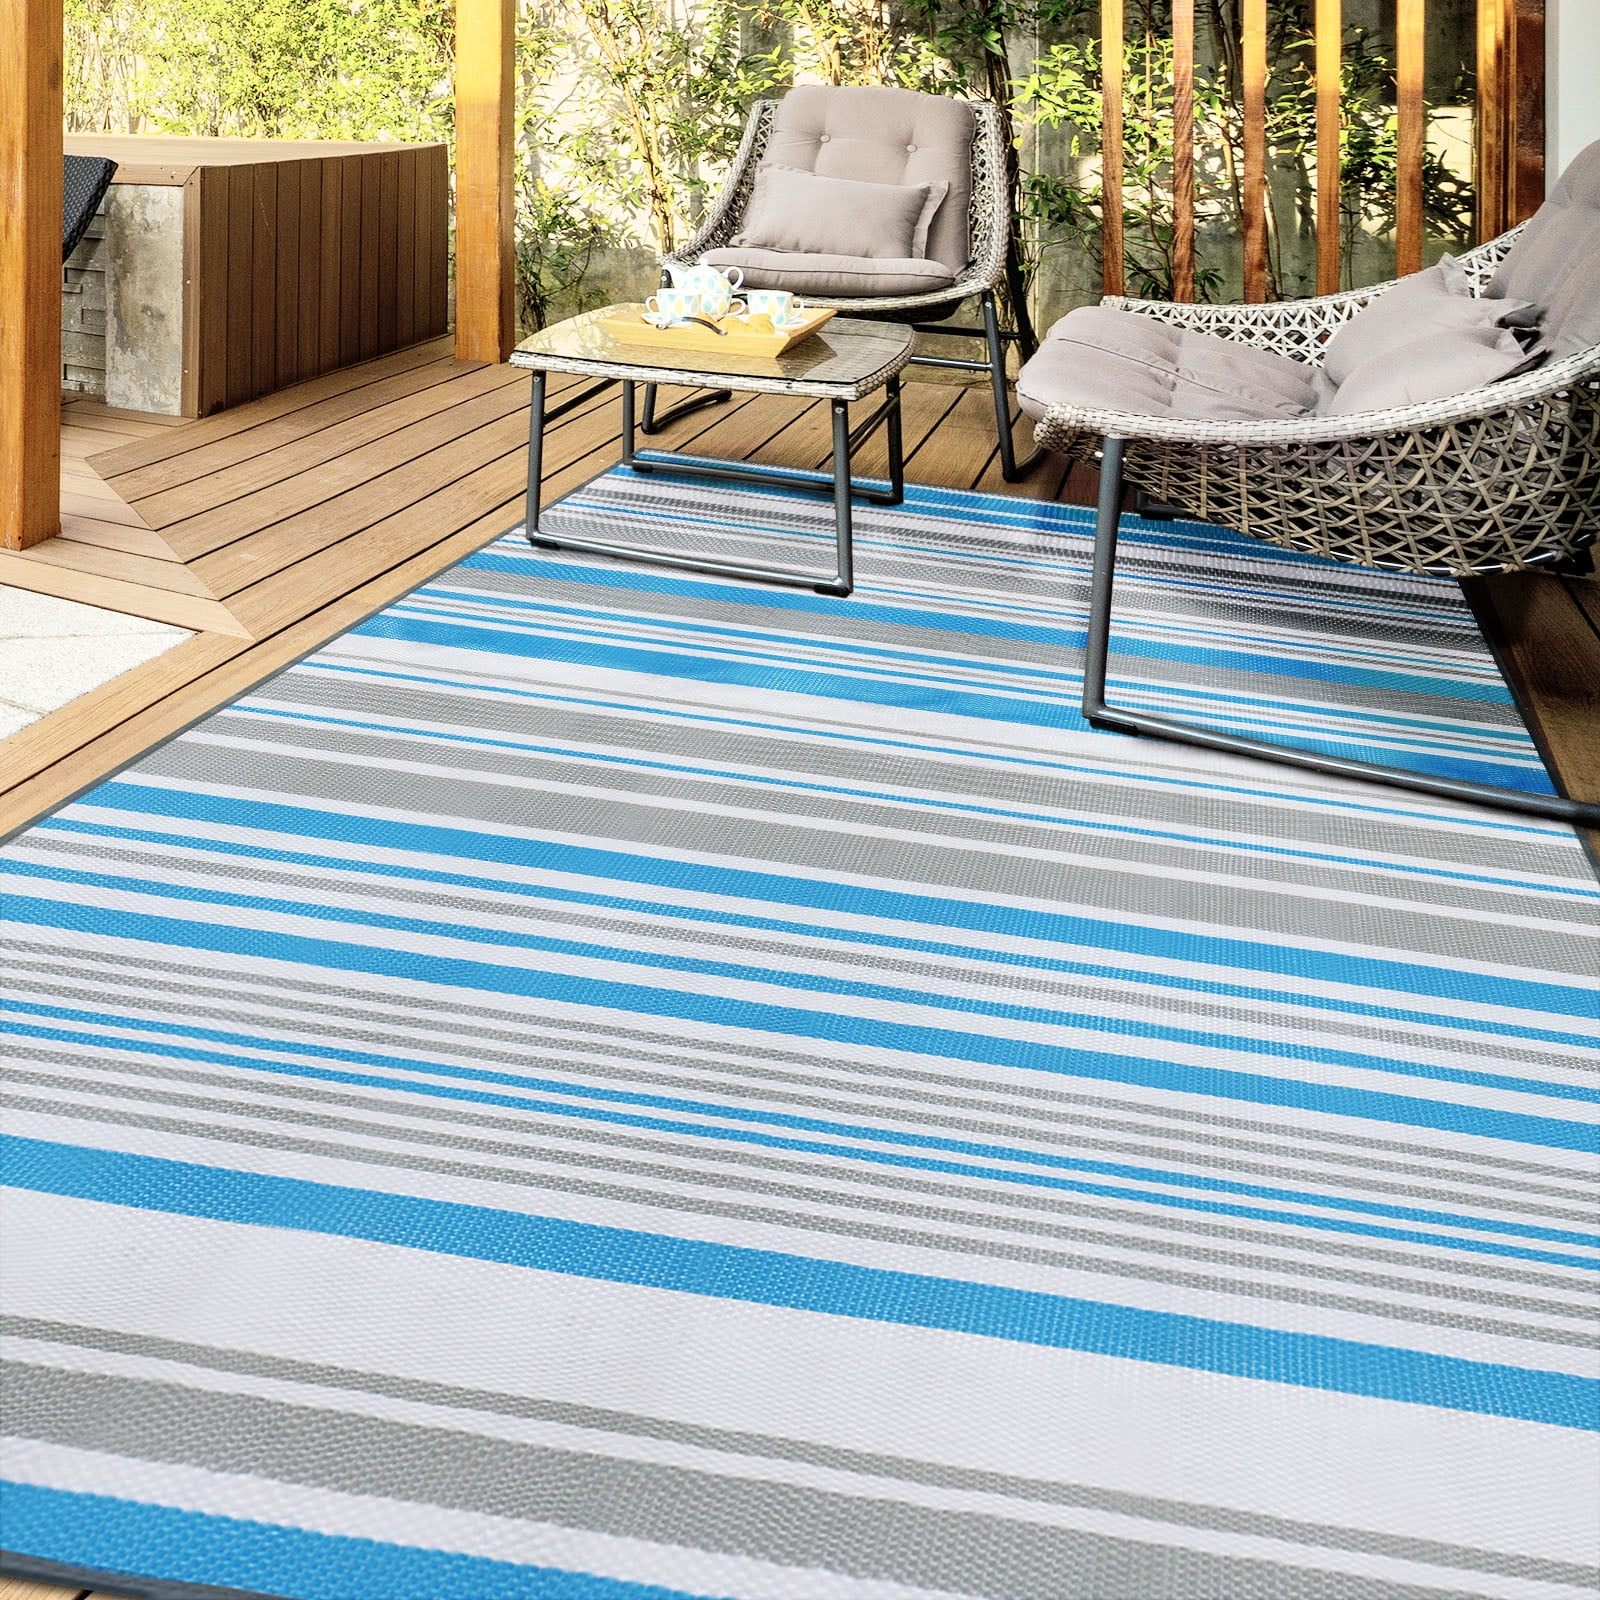  Outdoor Rug Carpet,Watercolor Pink Flower Black Vertical Stripe  Area Rug,Portable Non Slip Carpet Mat for Deck Camping Patios Picnic 4x6 ft  : Patio, Lawn & Garden